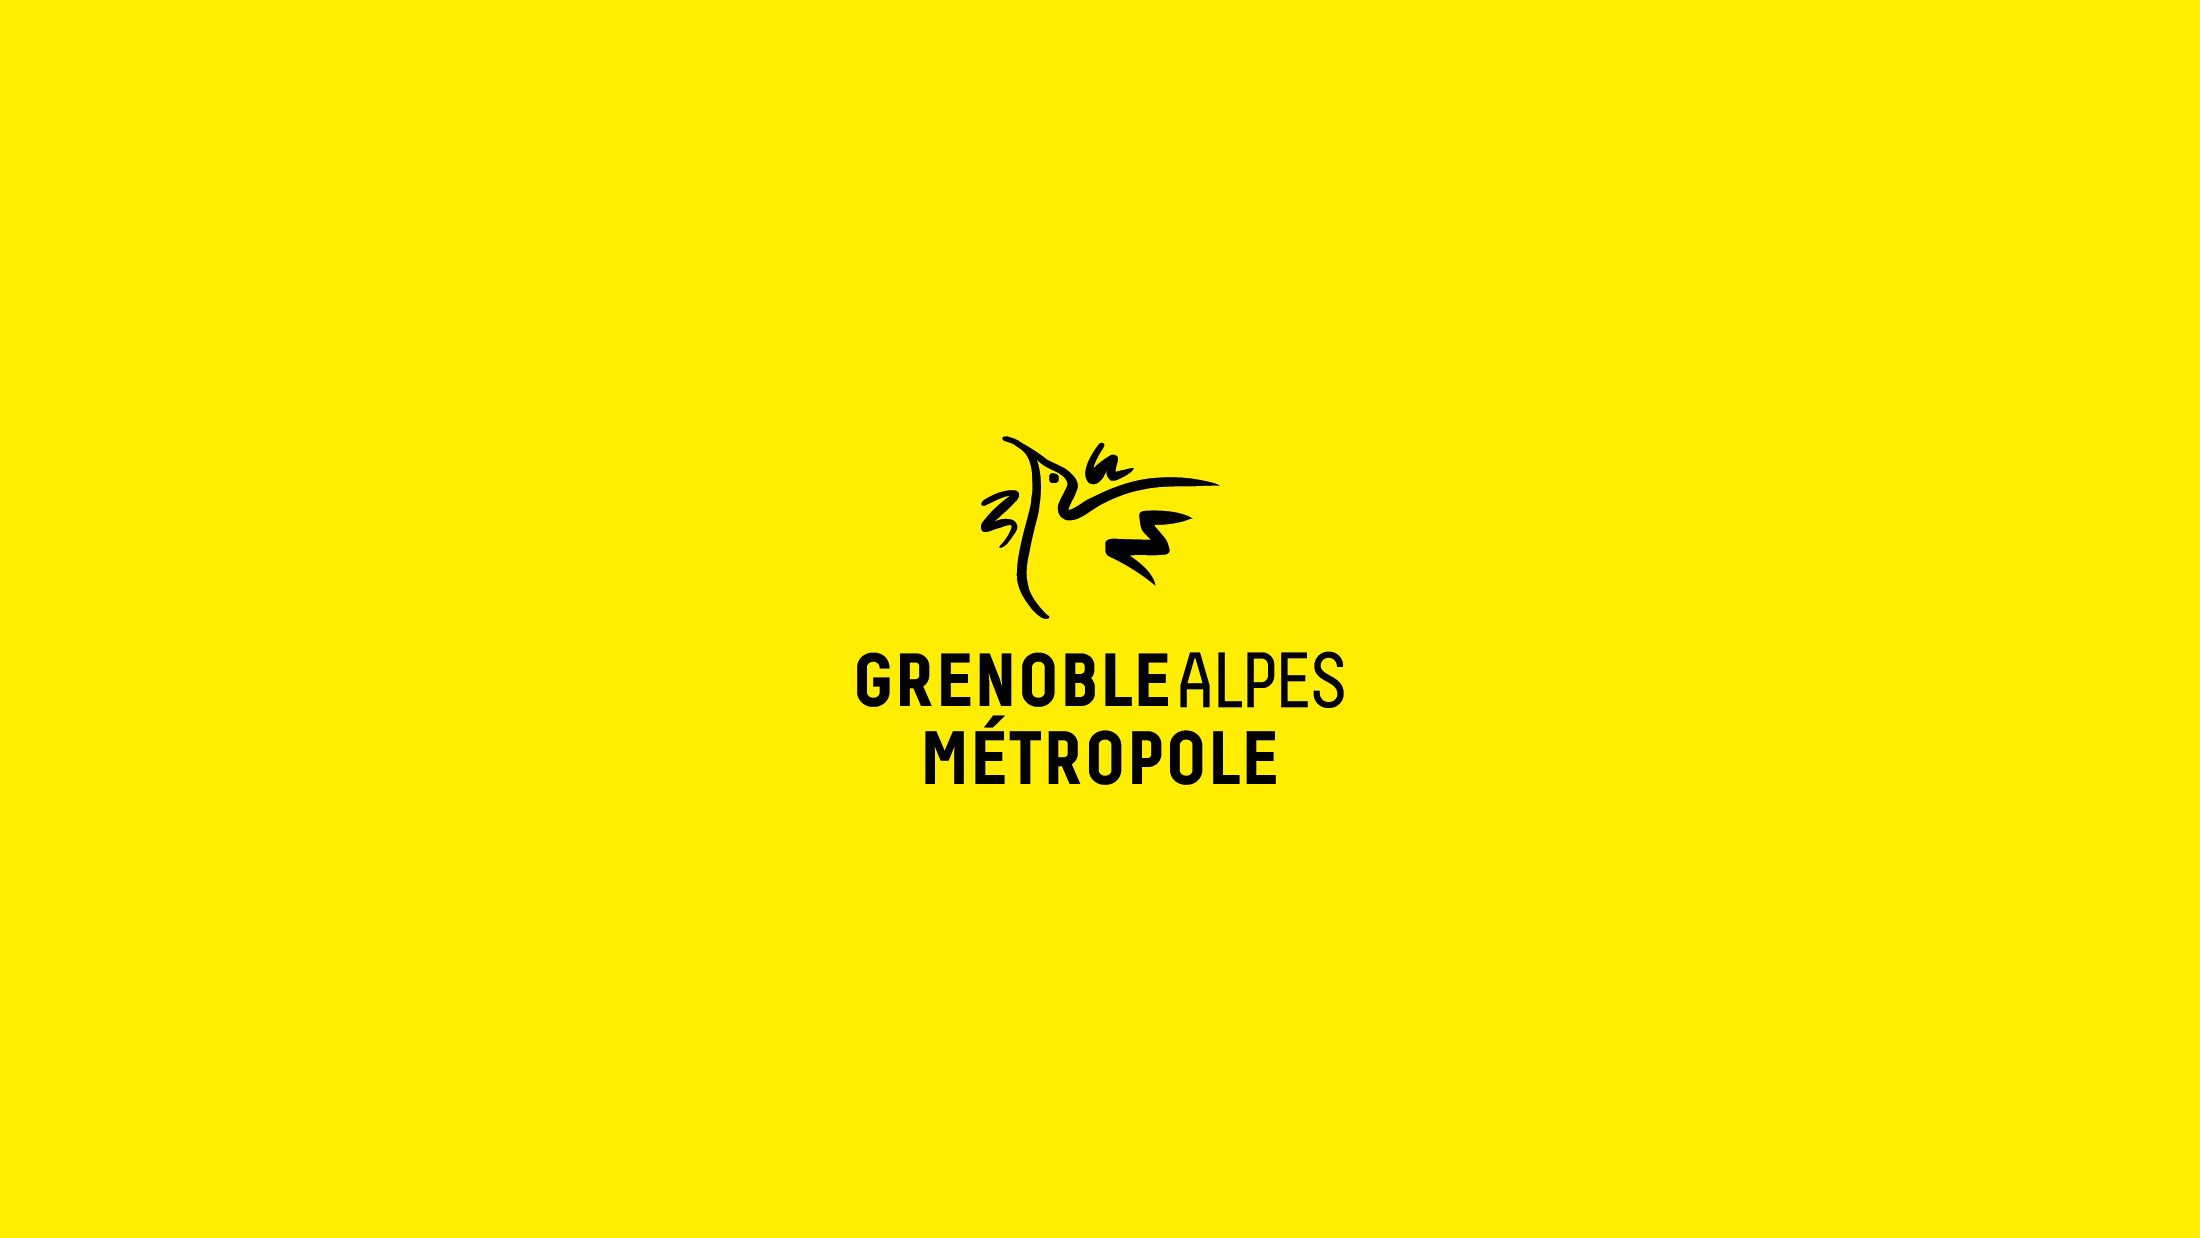 Grenoble Alpes metropole